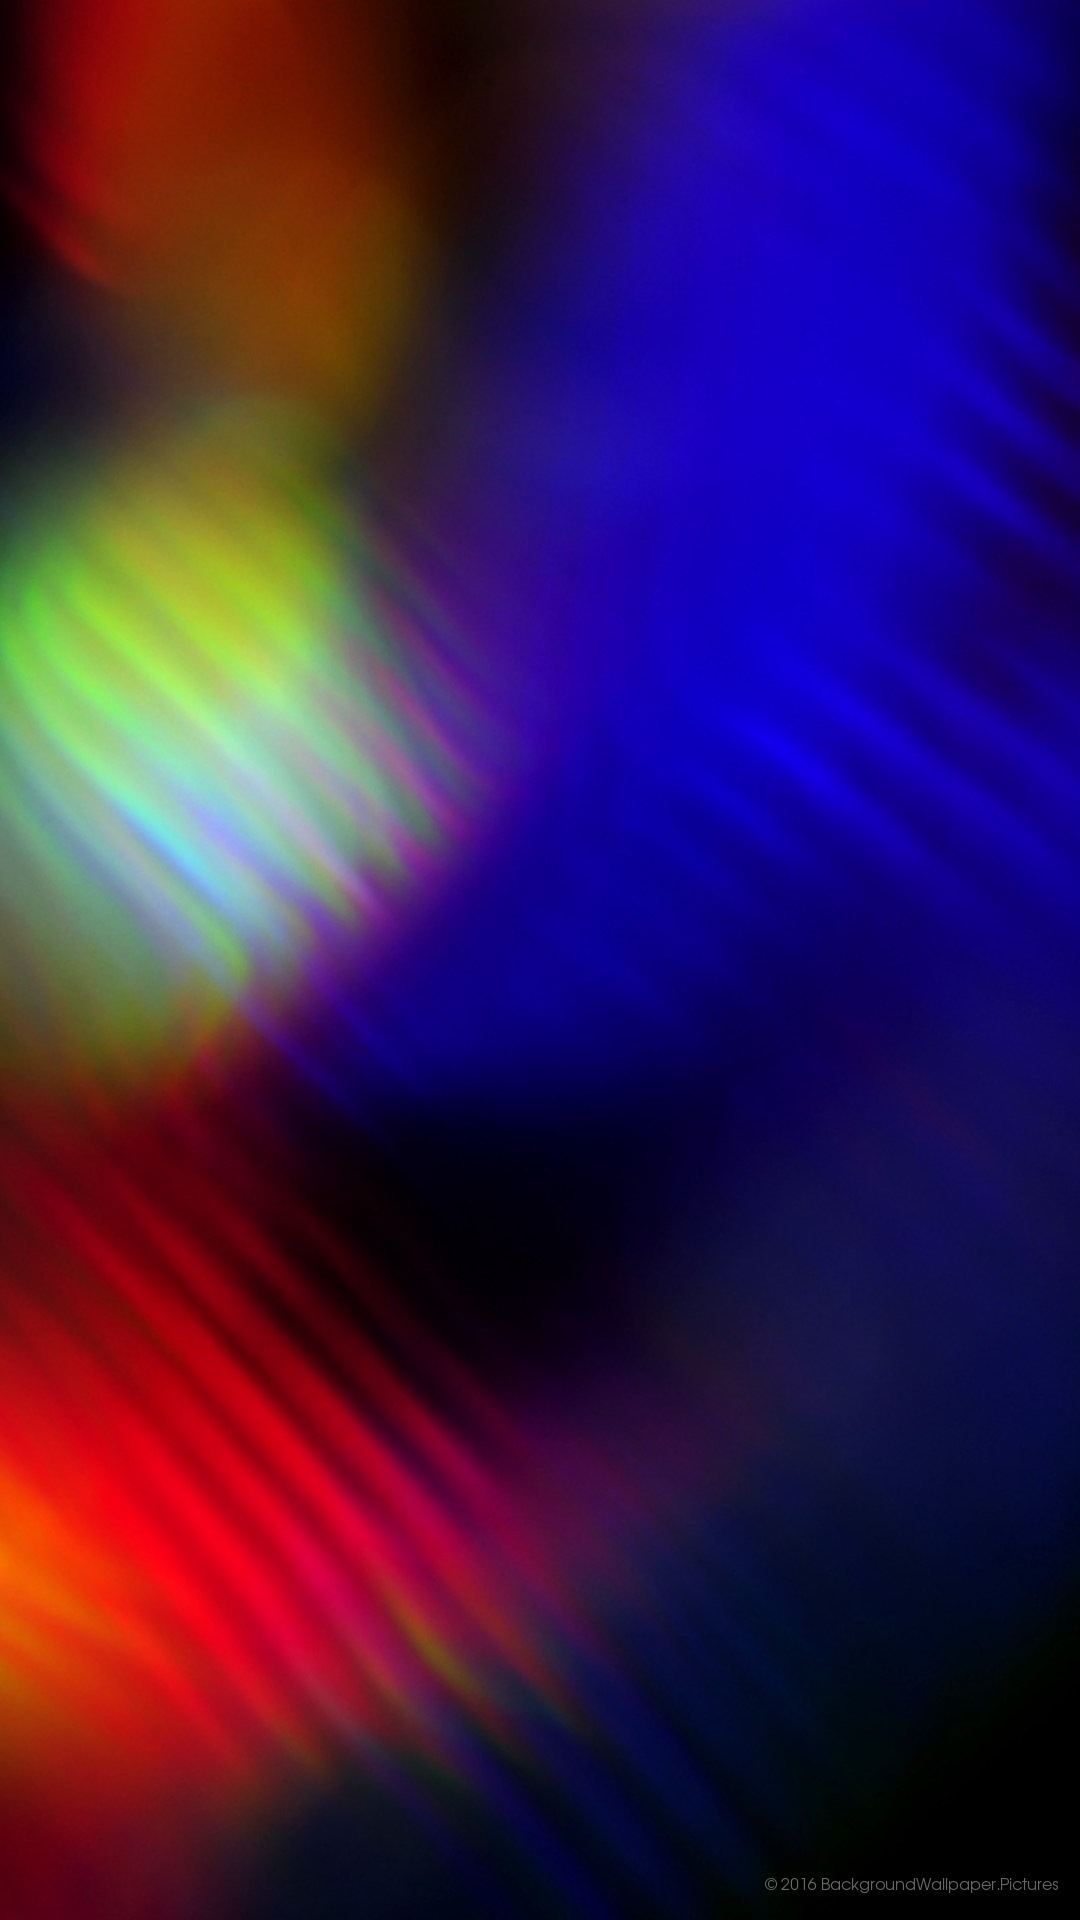 galaxy note 3 wallpaper hd 1080p,blau,violett,licht,lila,buntheit